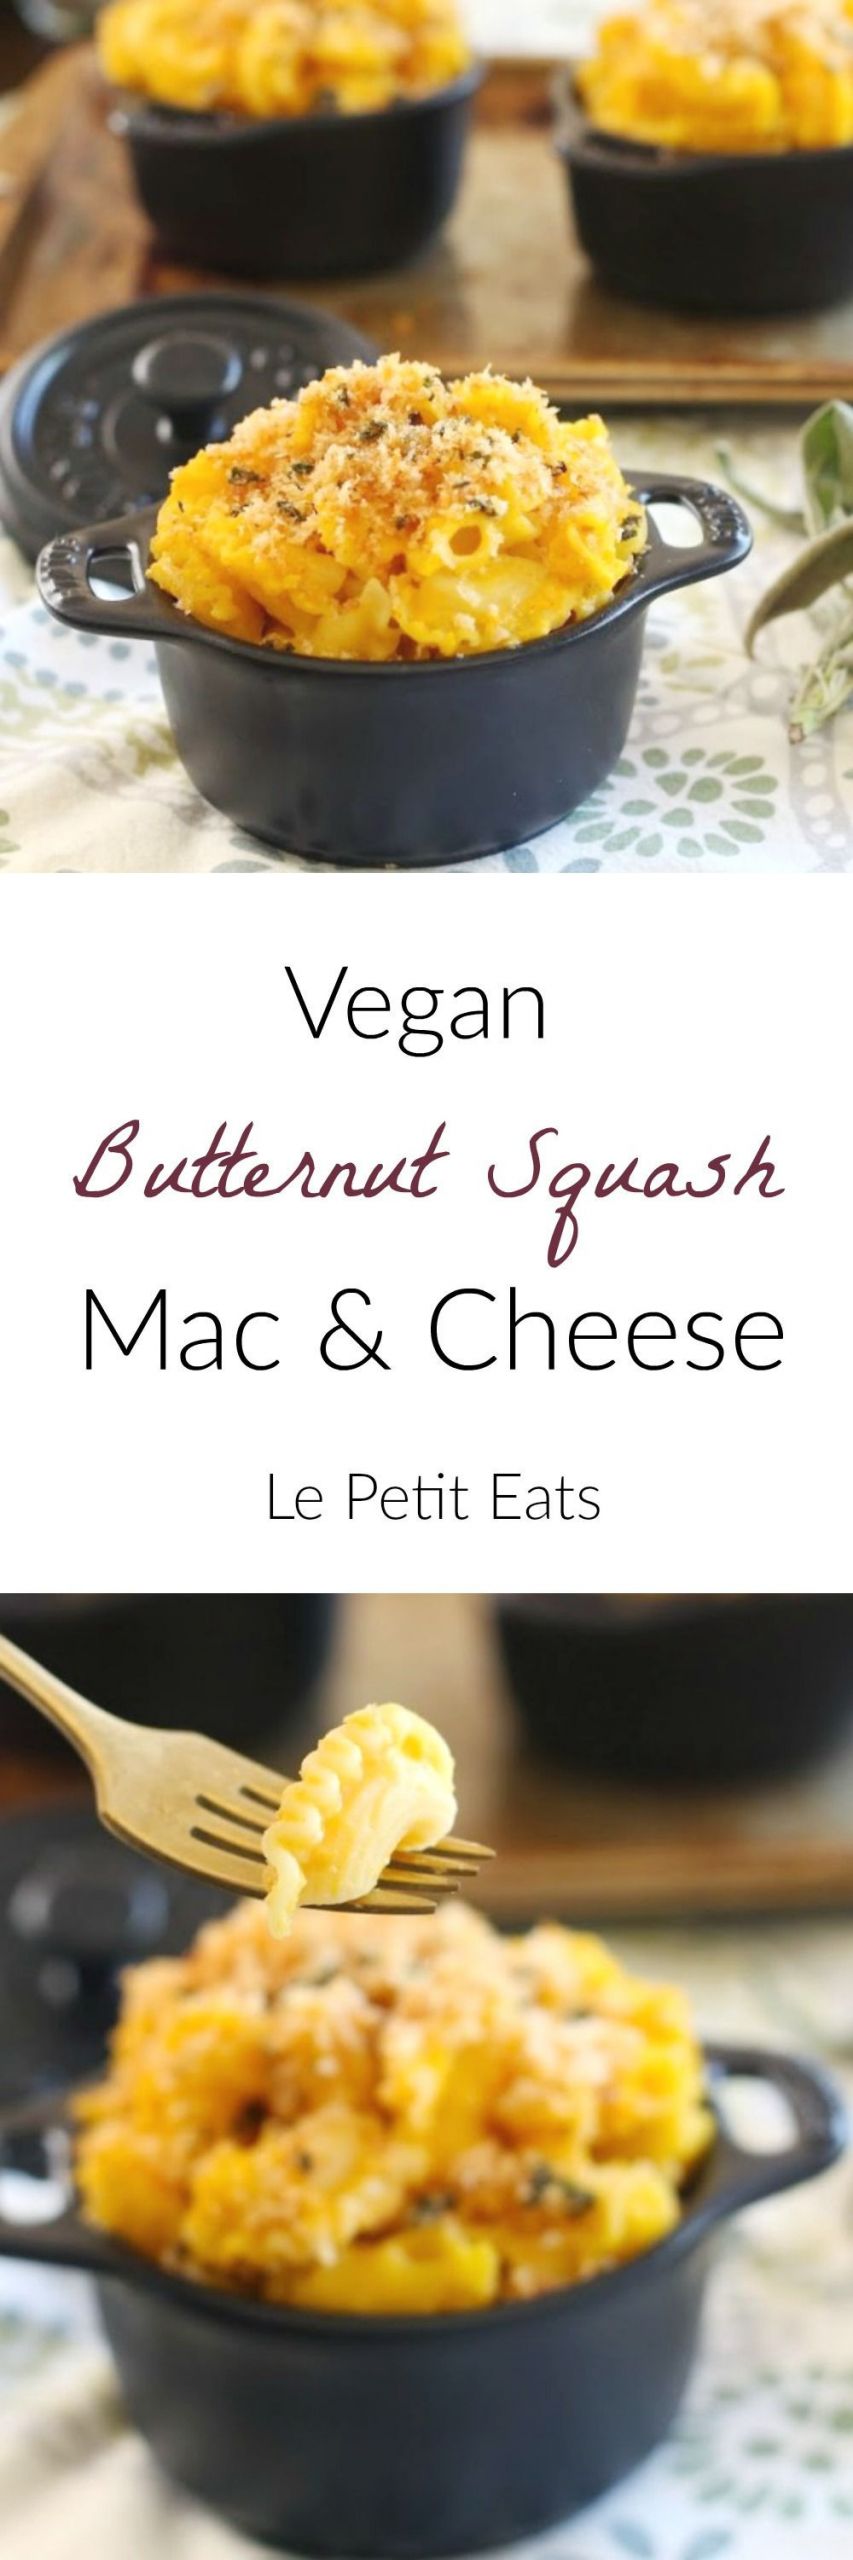 Butternut Squash Mac And Cheese Vegan
 Vegan Butternut Squash Mac and Cheese Recipe